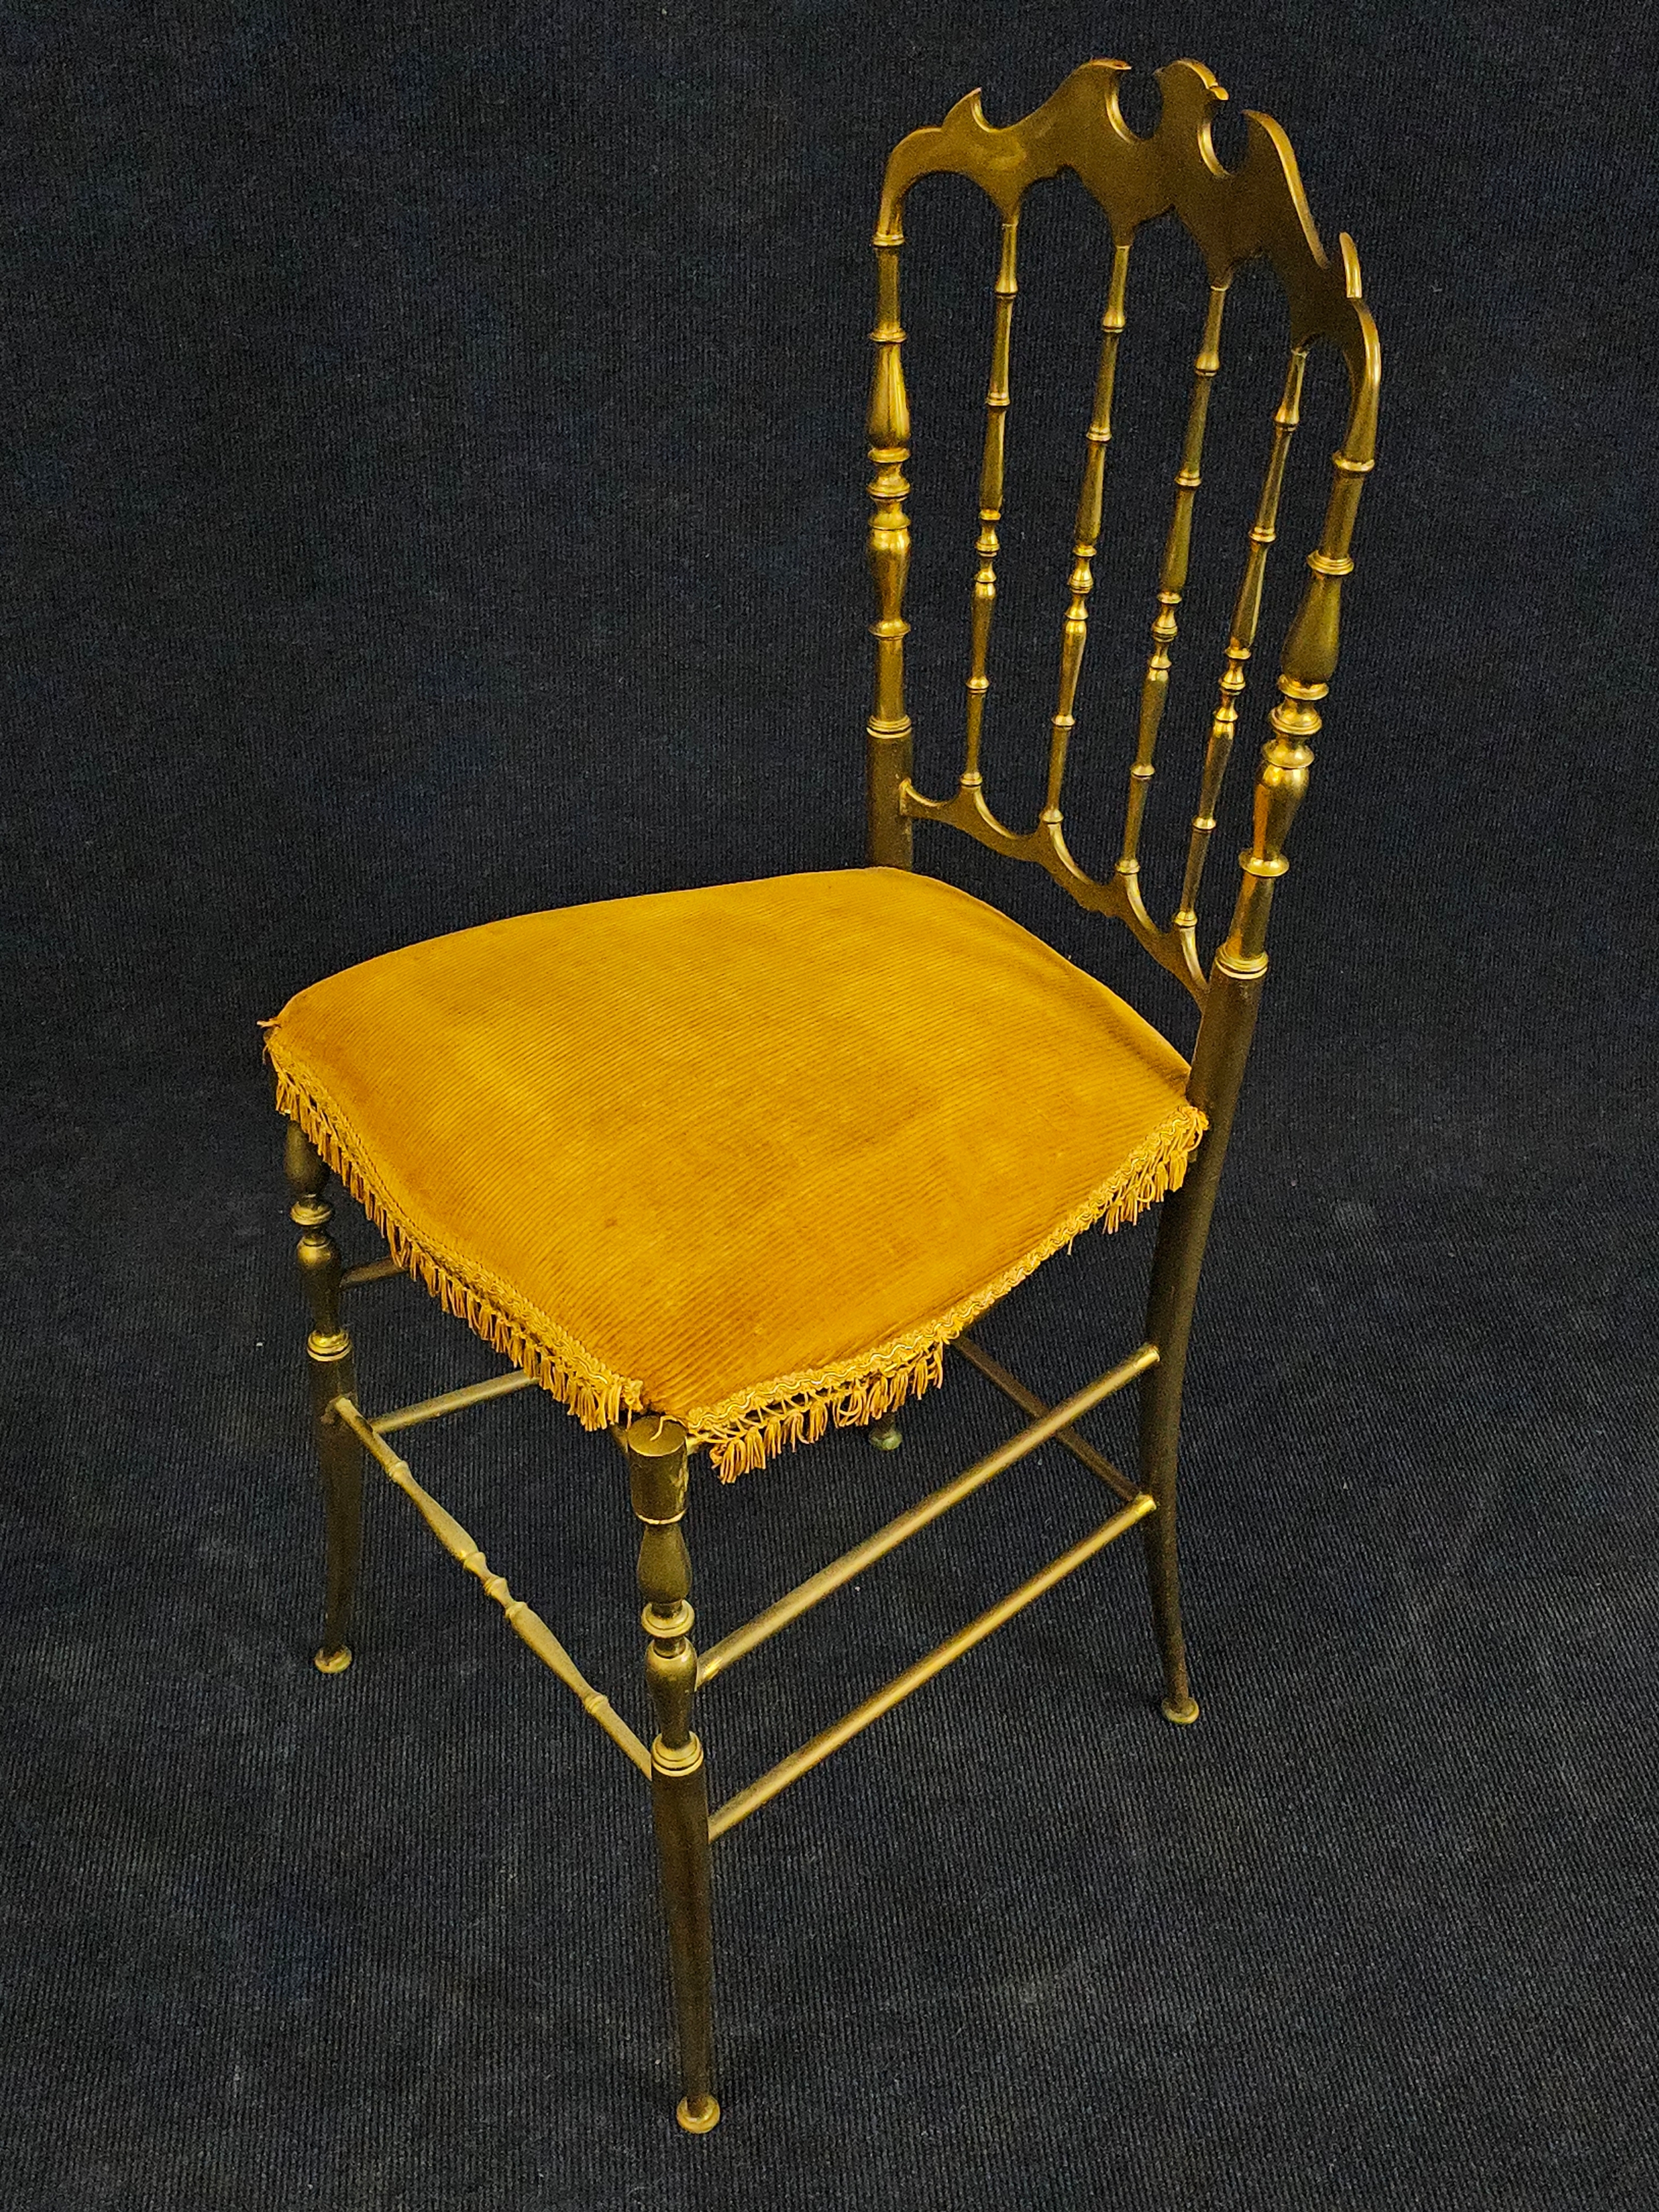 A brass salon chair - Image 2 of 8